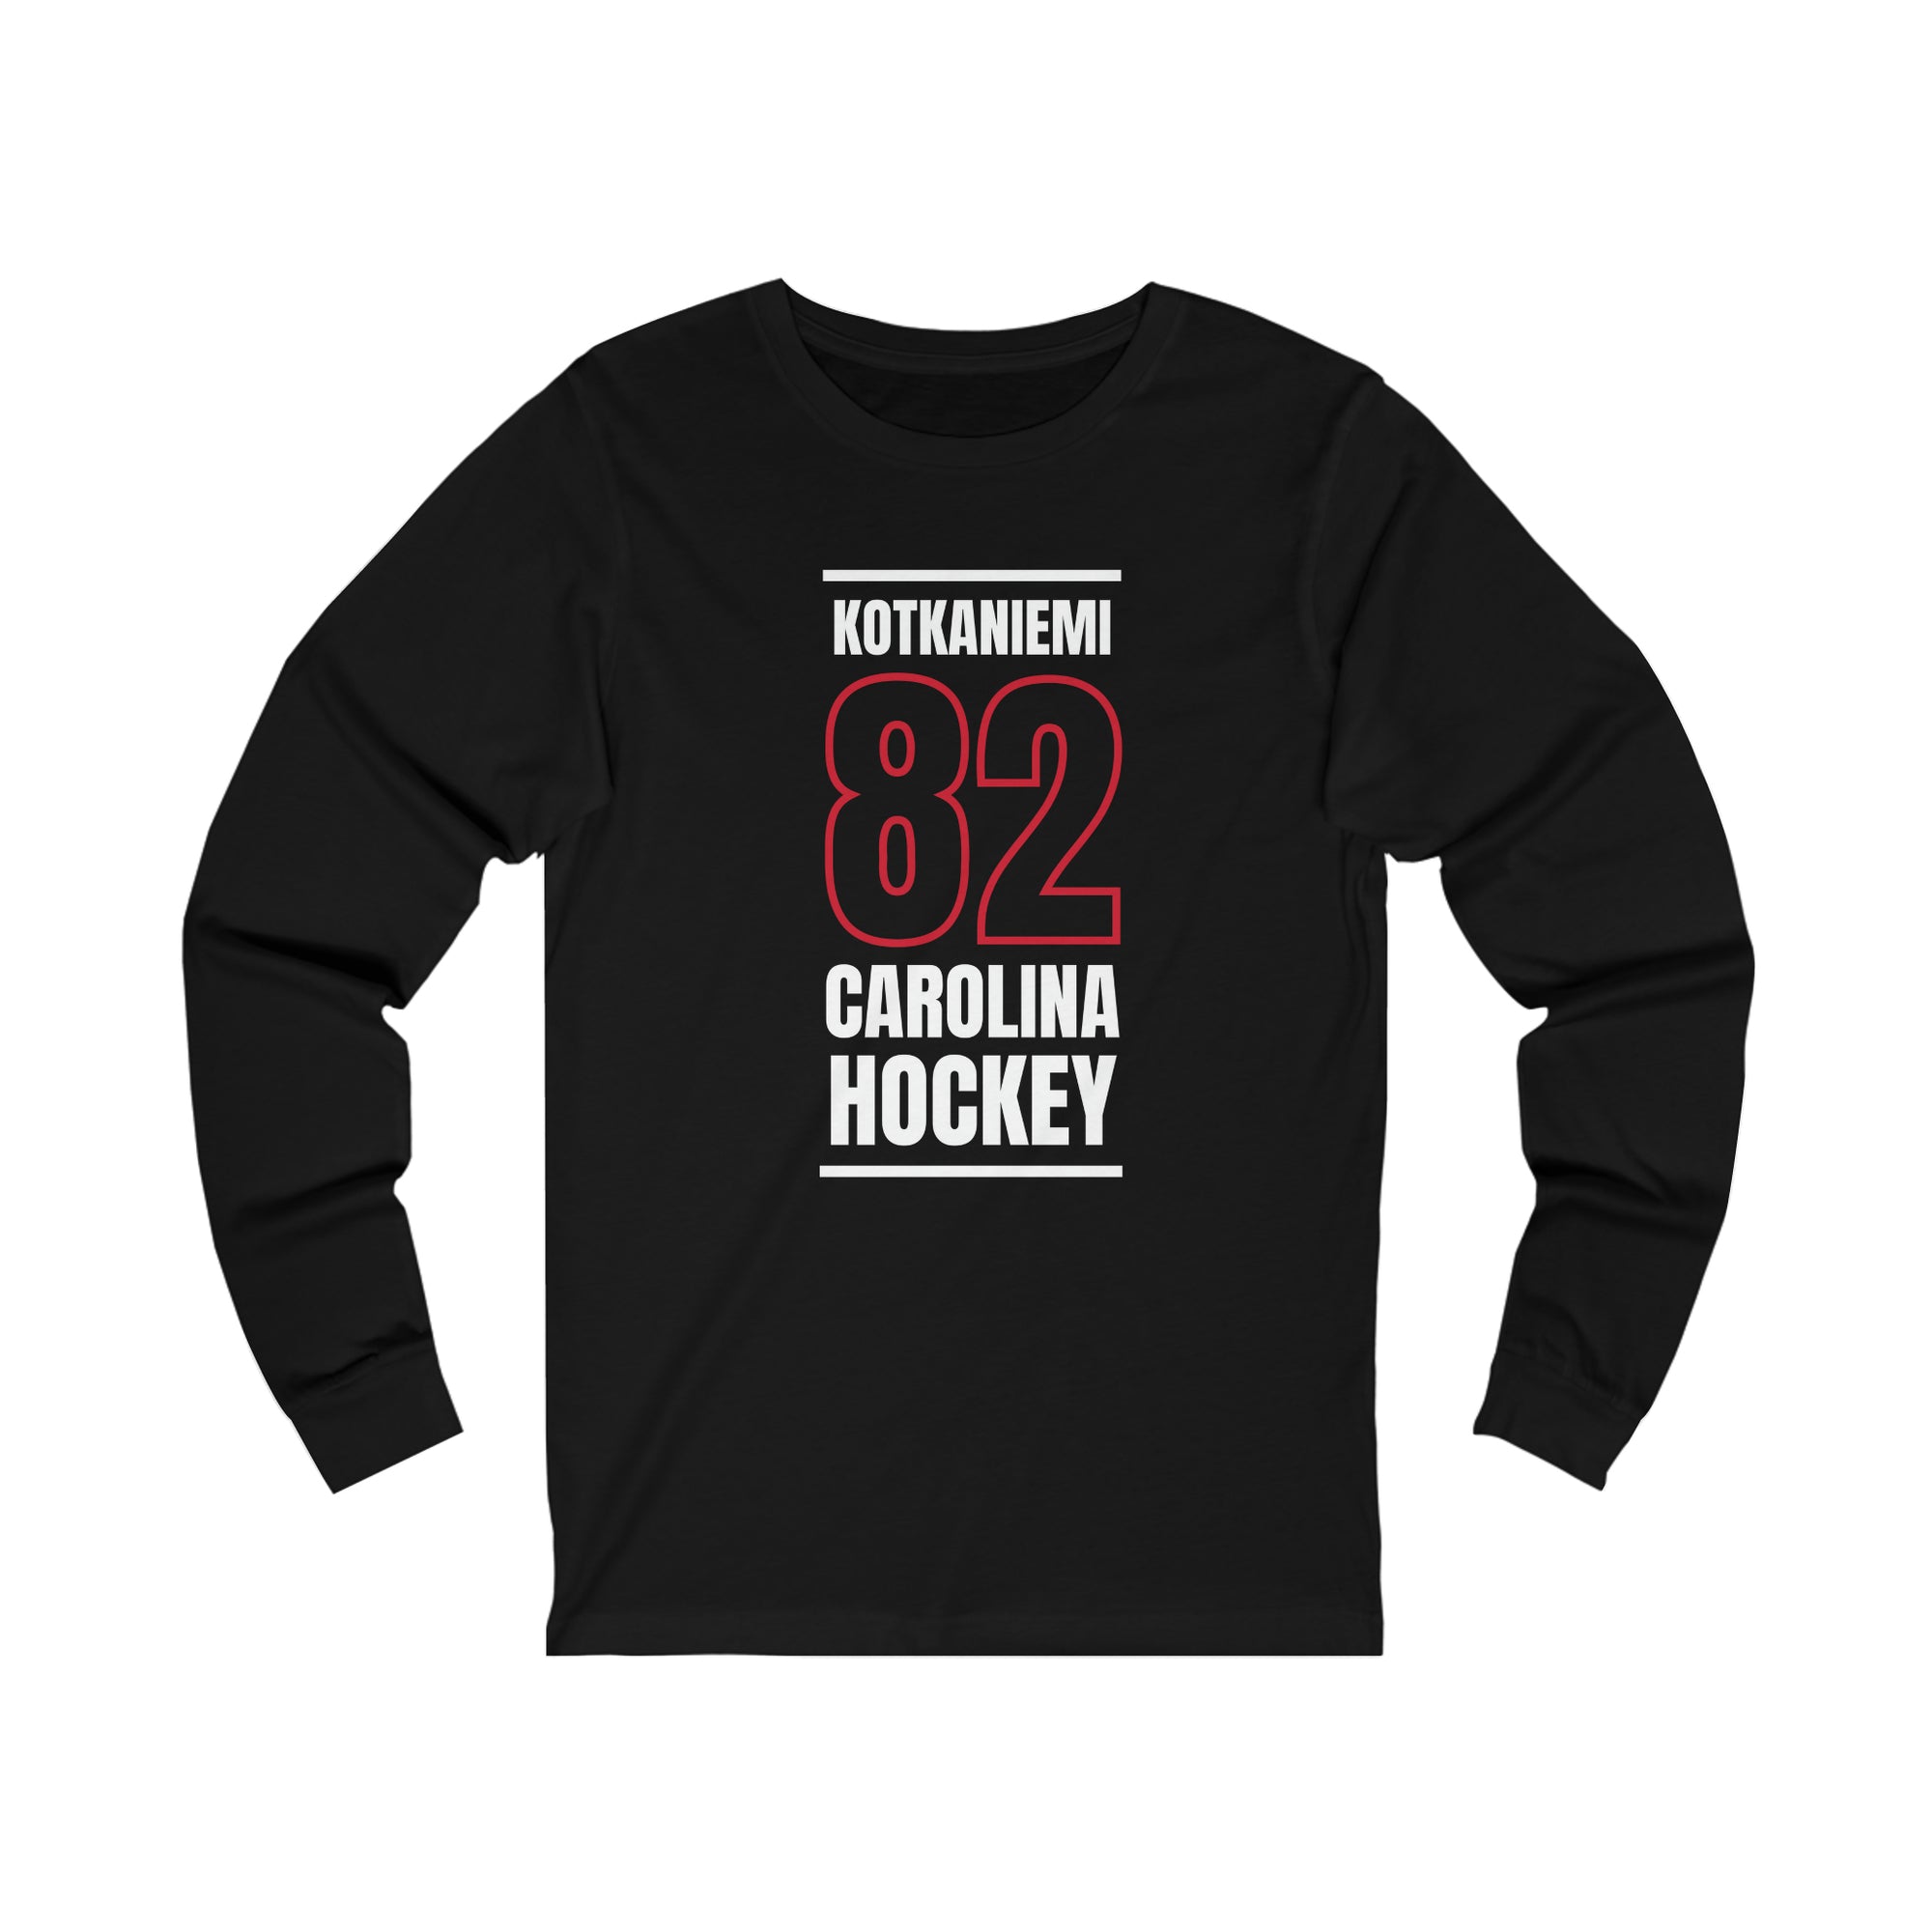 Kotkaniemi 82 Carolina Hockey Black Vertical Design Unisex Jersey Long Sleeve Shirt